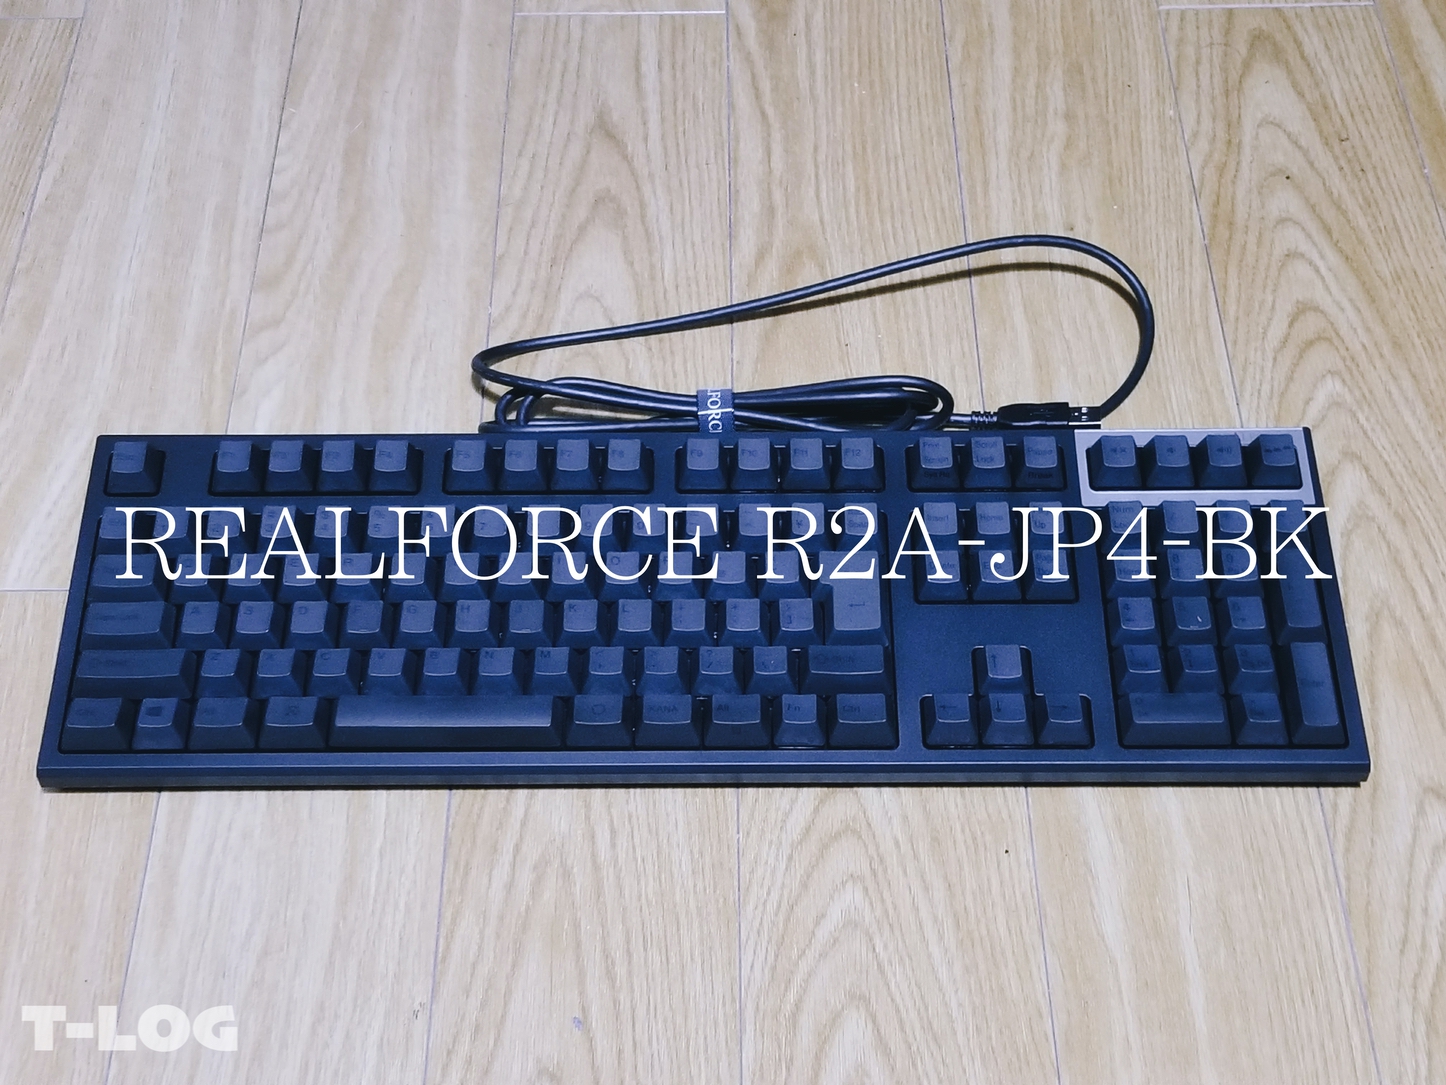 REALFORCE A R2 日本語 フルキーボード:黒　R2A-JP4-BK